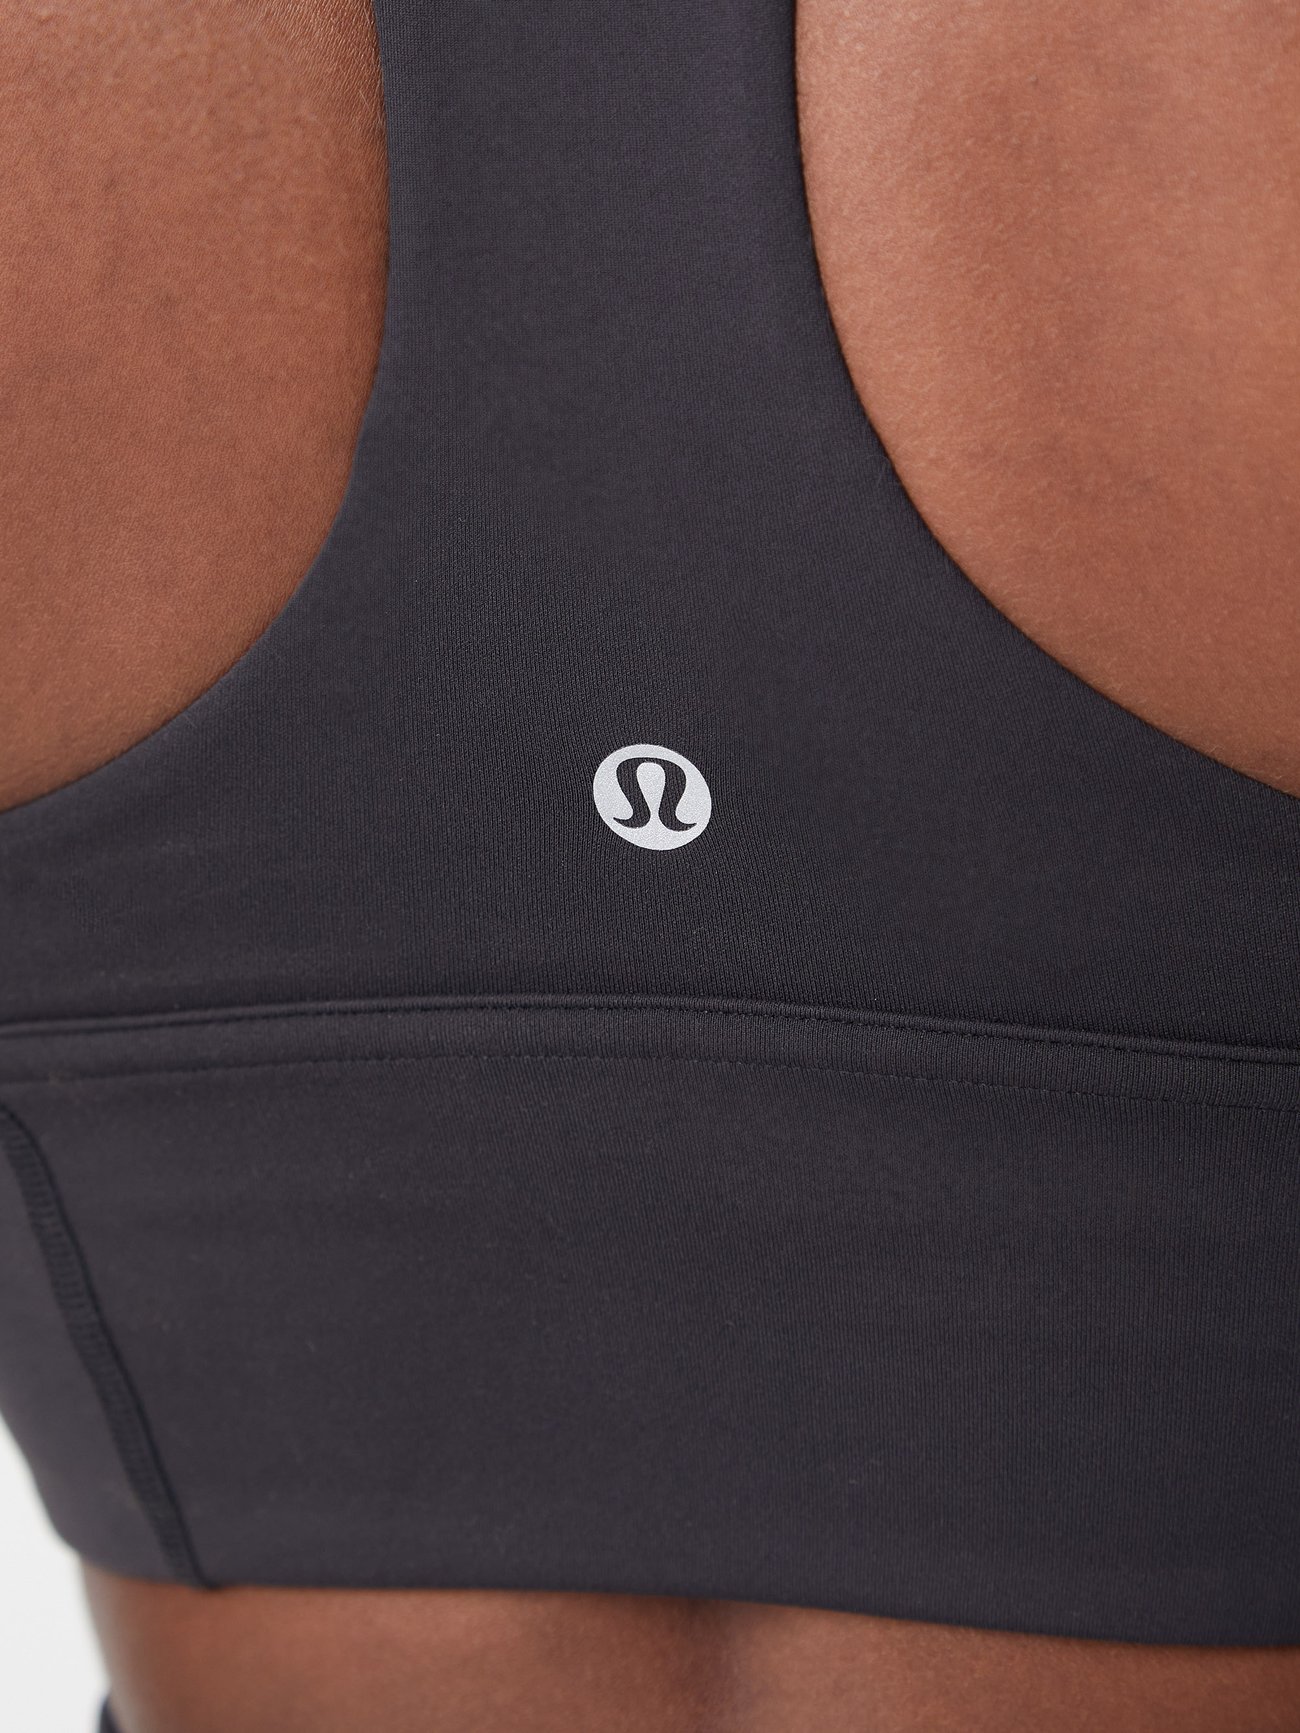 Black Wunder medium-impact longline sports bra